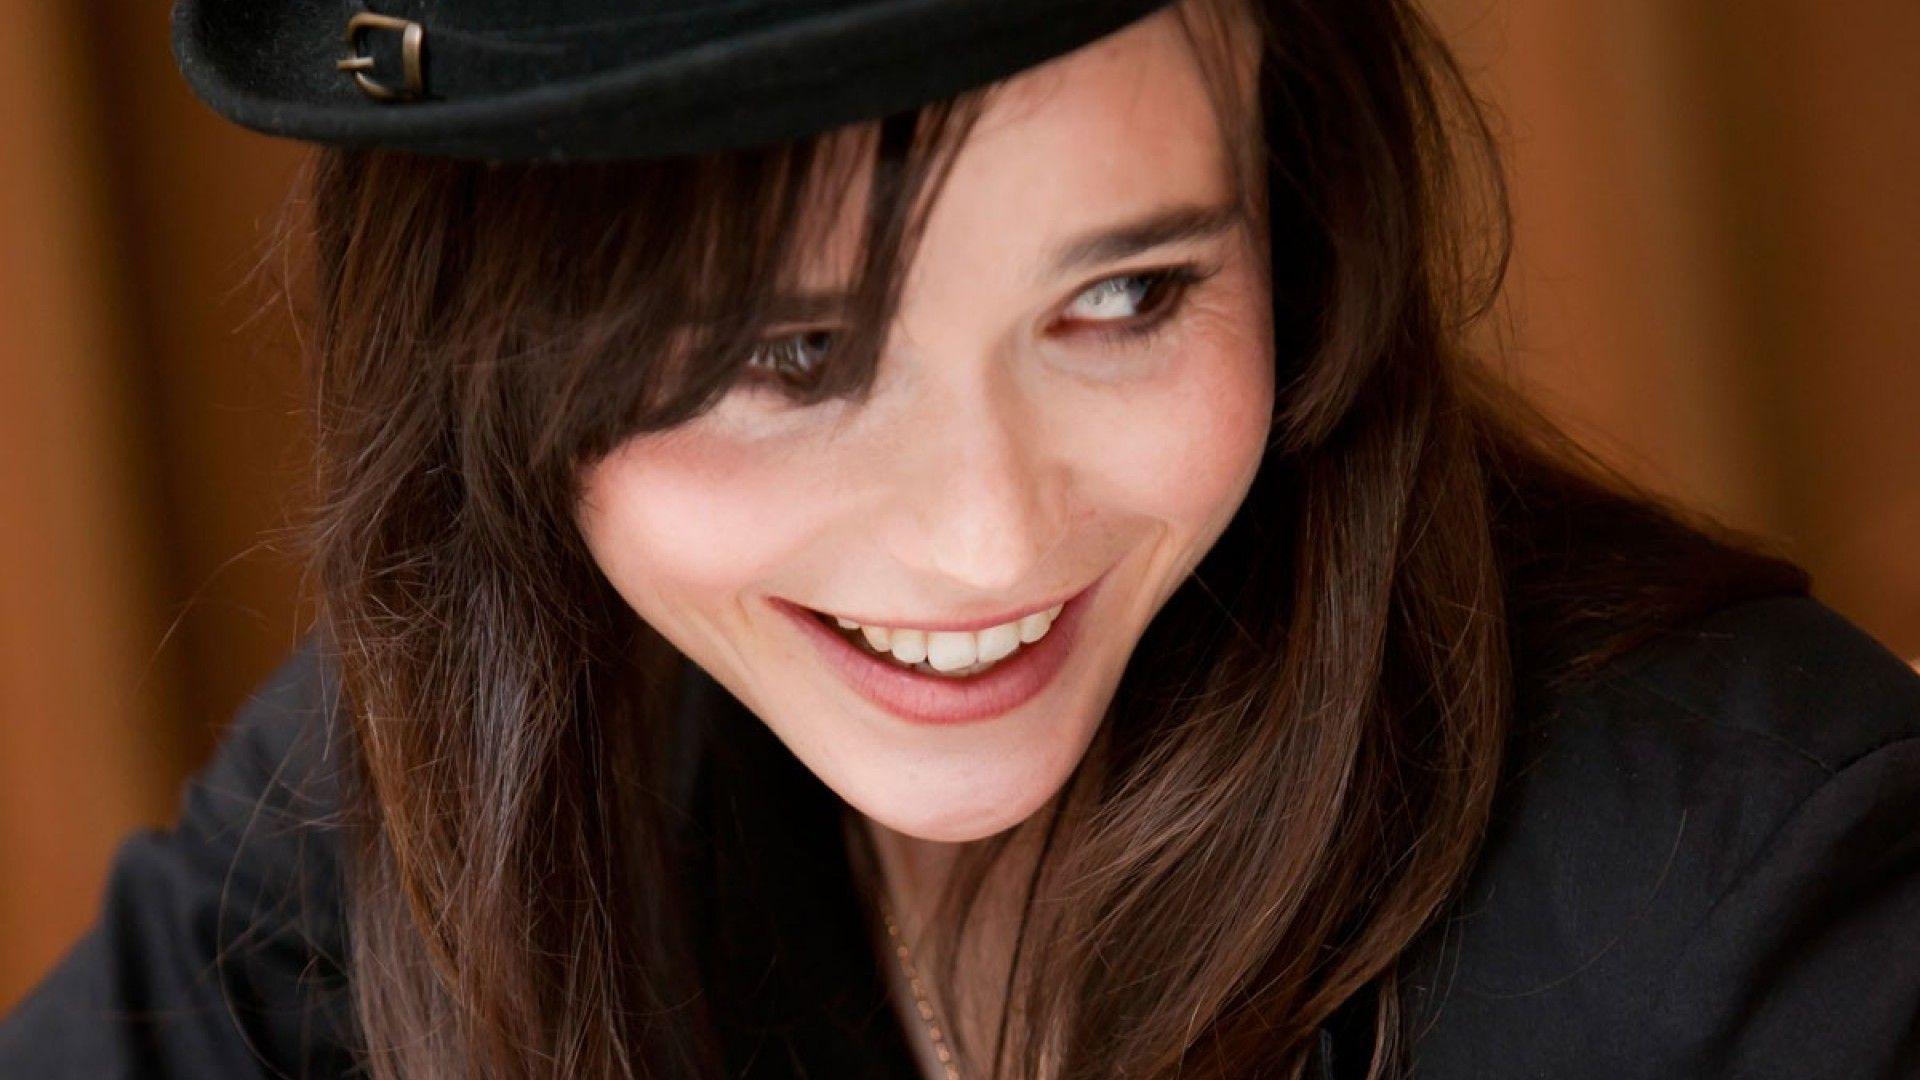 Ellen Page Image Wallpaper HD Wallpaper. awshdwallpaper